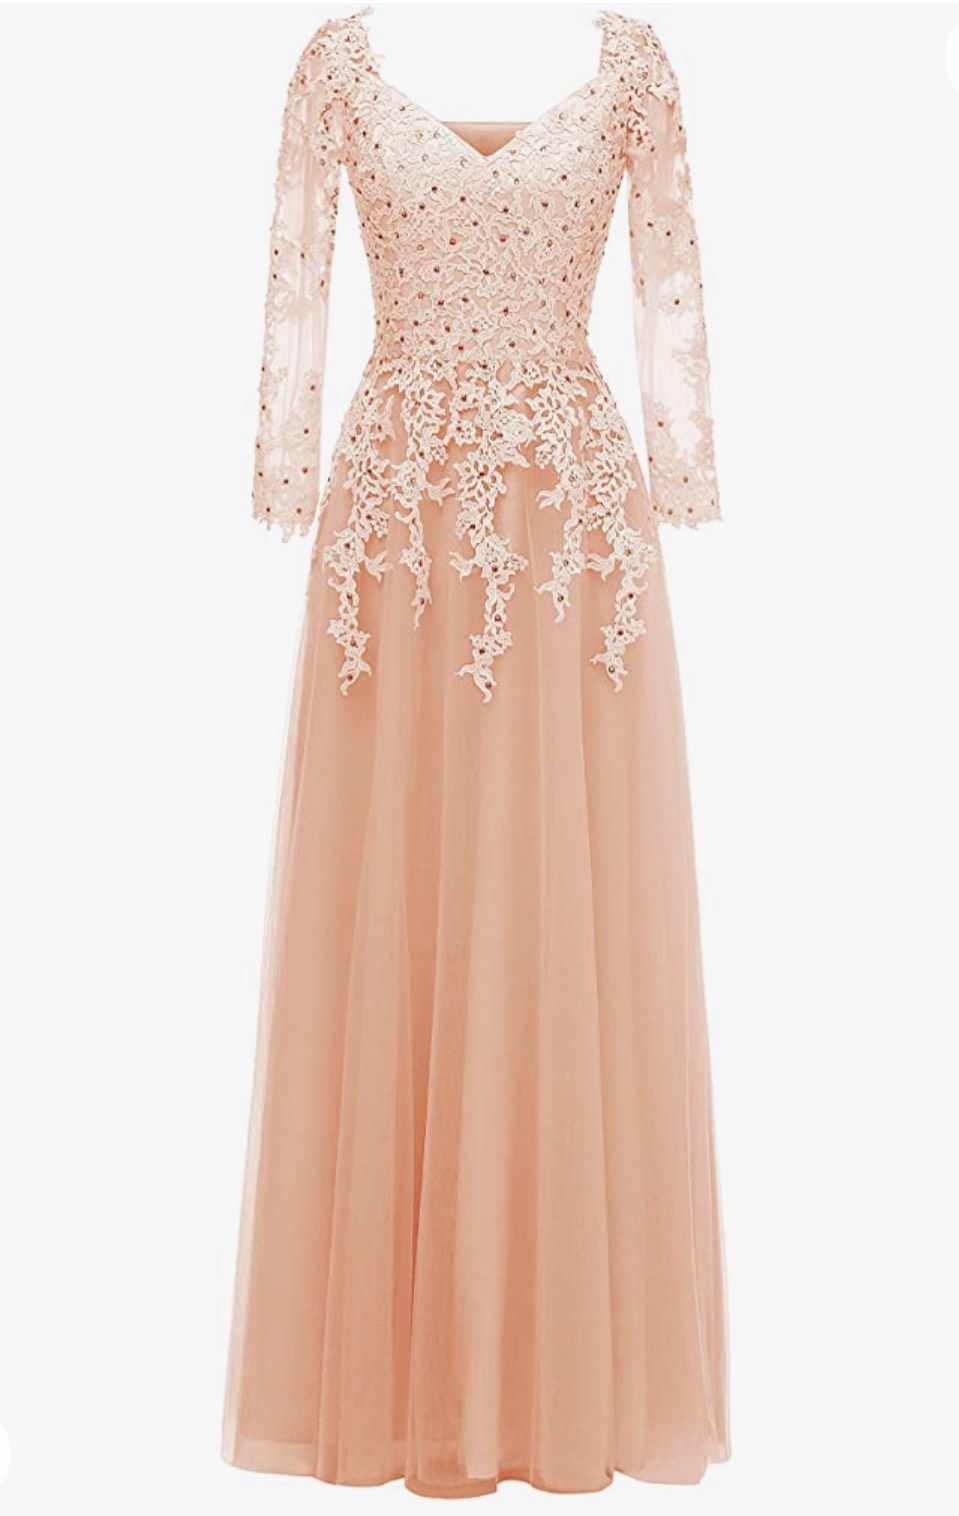 Plus Size 18 Prom Long Sleeve Sheer Pink Mermaid Dress on Queenly